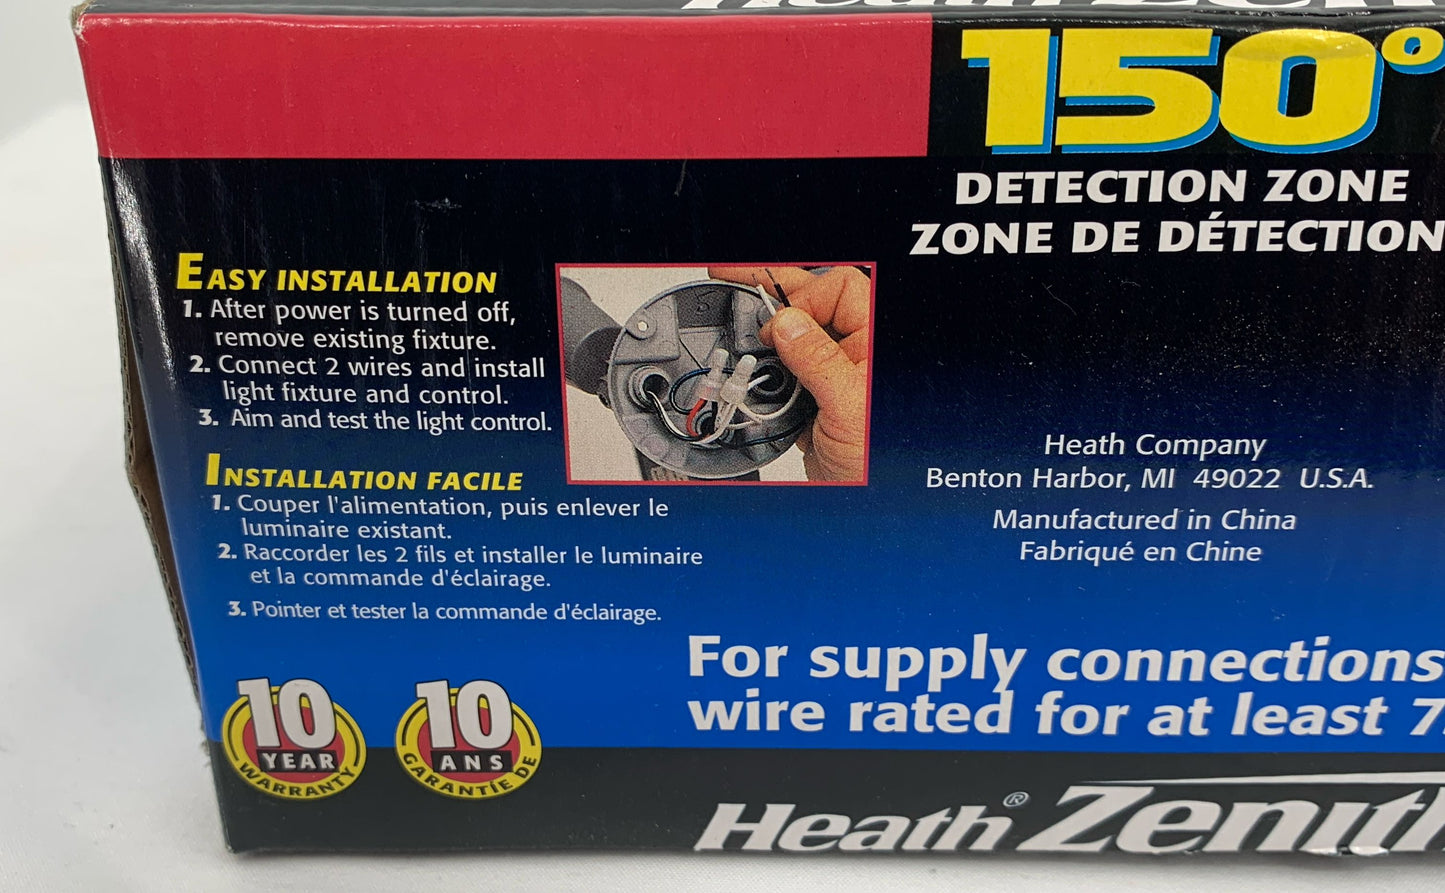 Heath Zenith Motion Sensor Security Light 150 Degree Detection Zone SL-5411-A